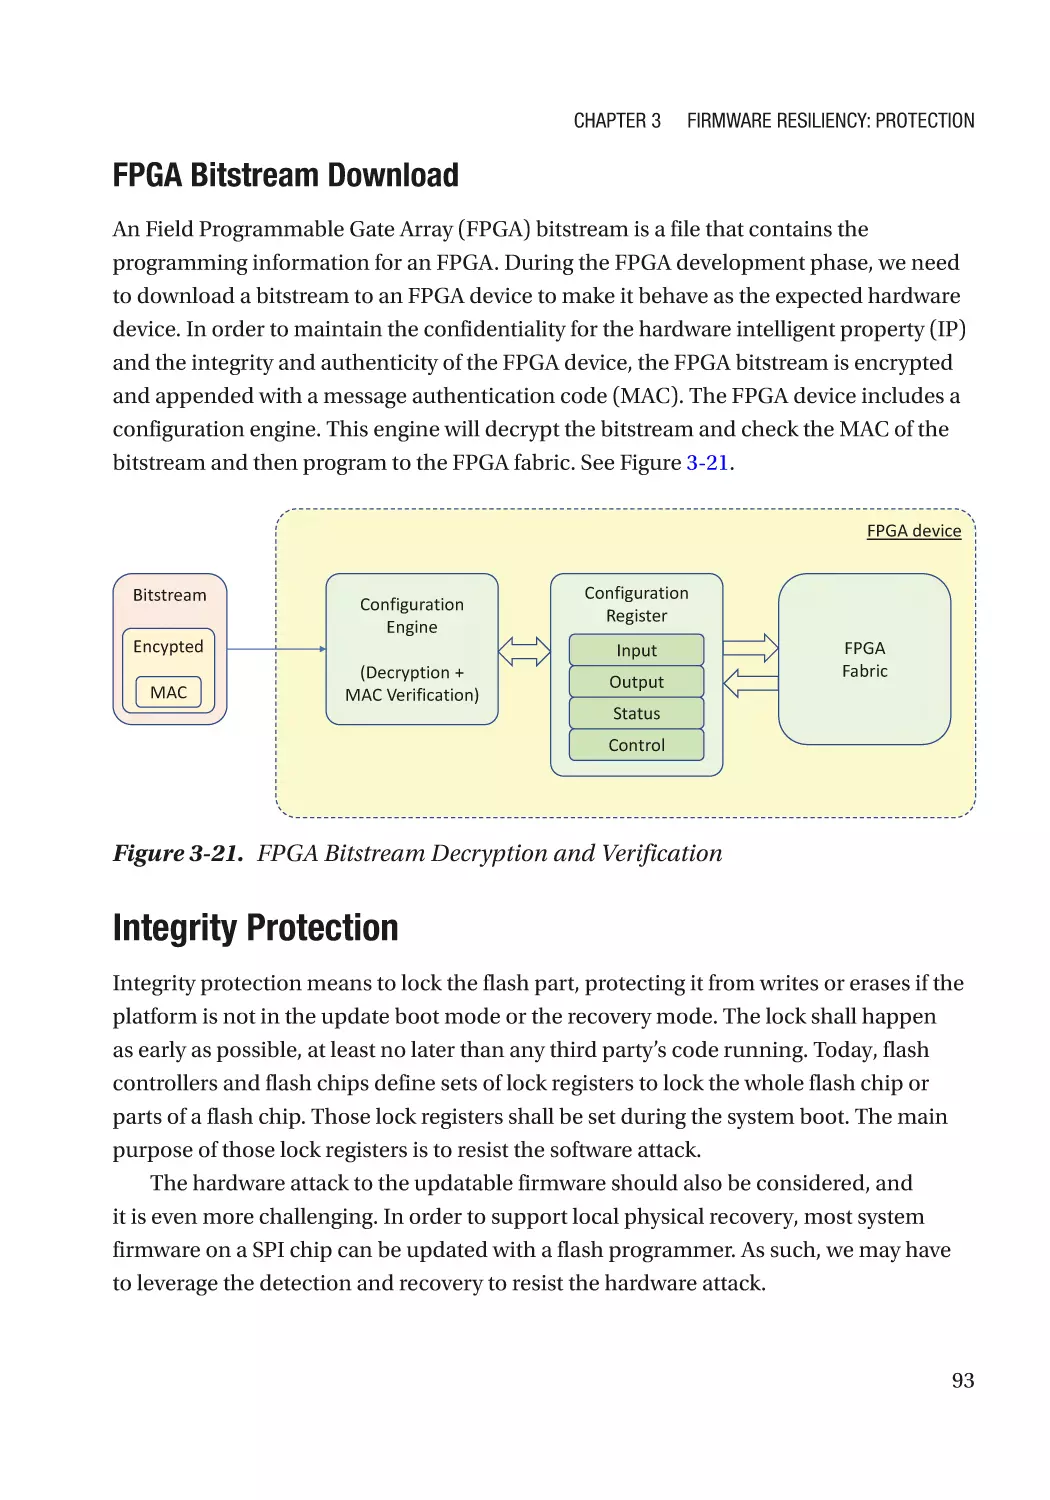 FPGA Bitstream Download
Integrity Protection